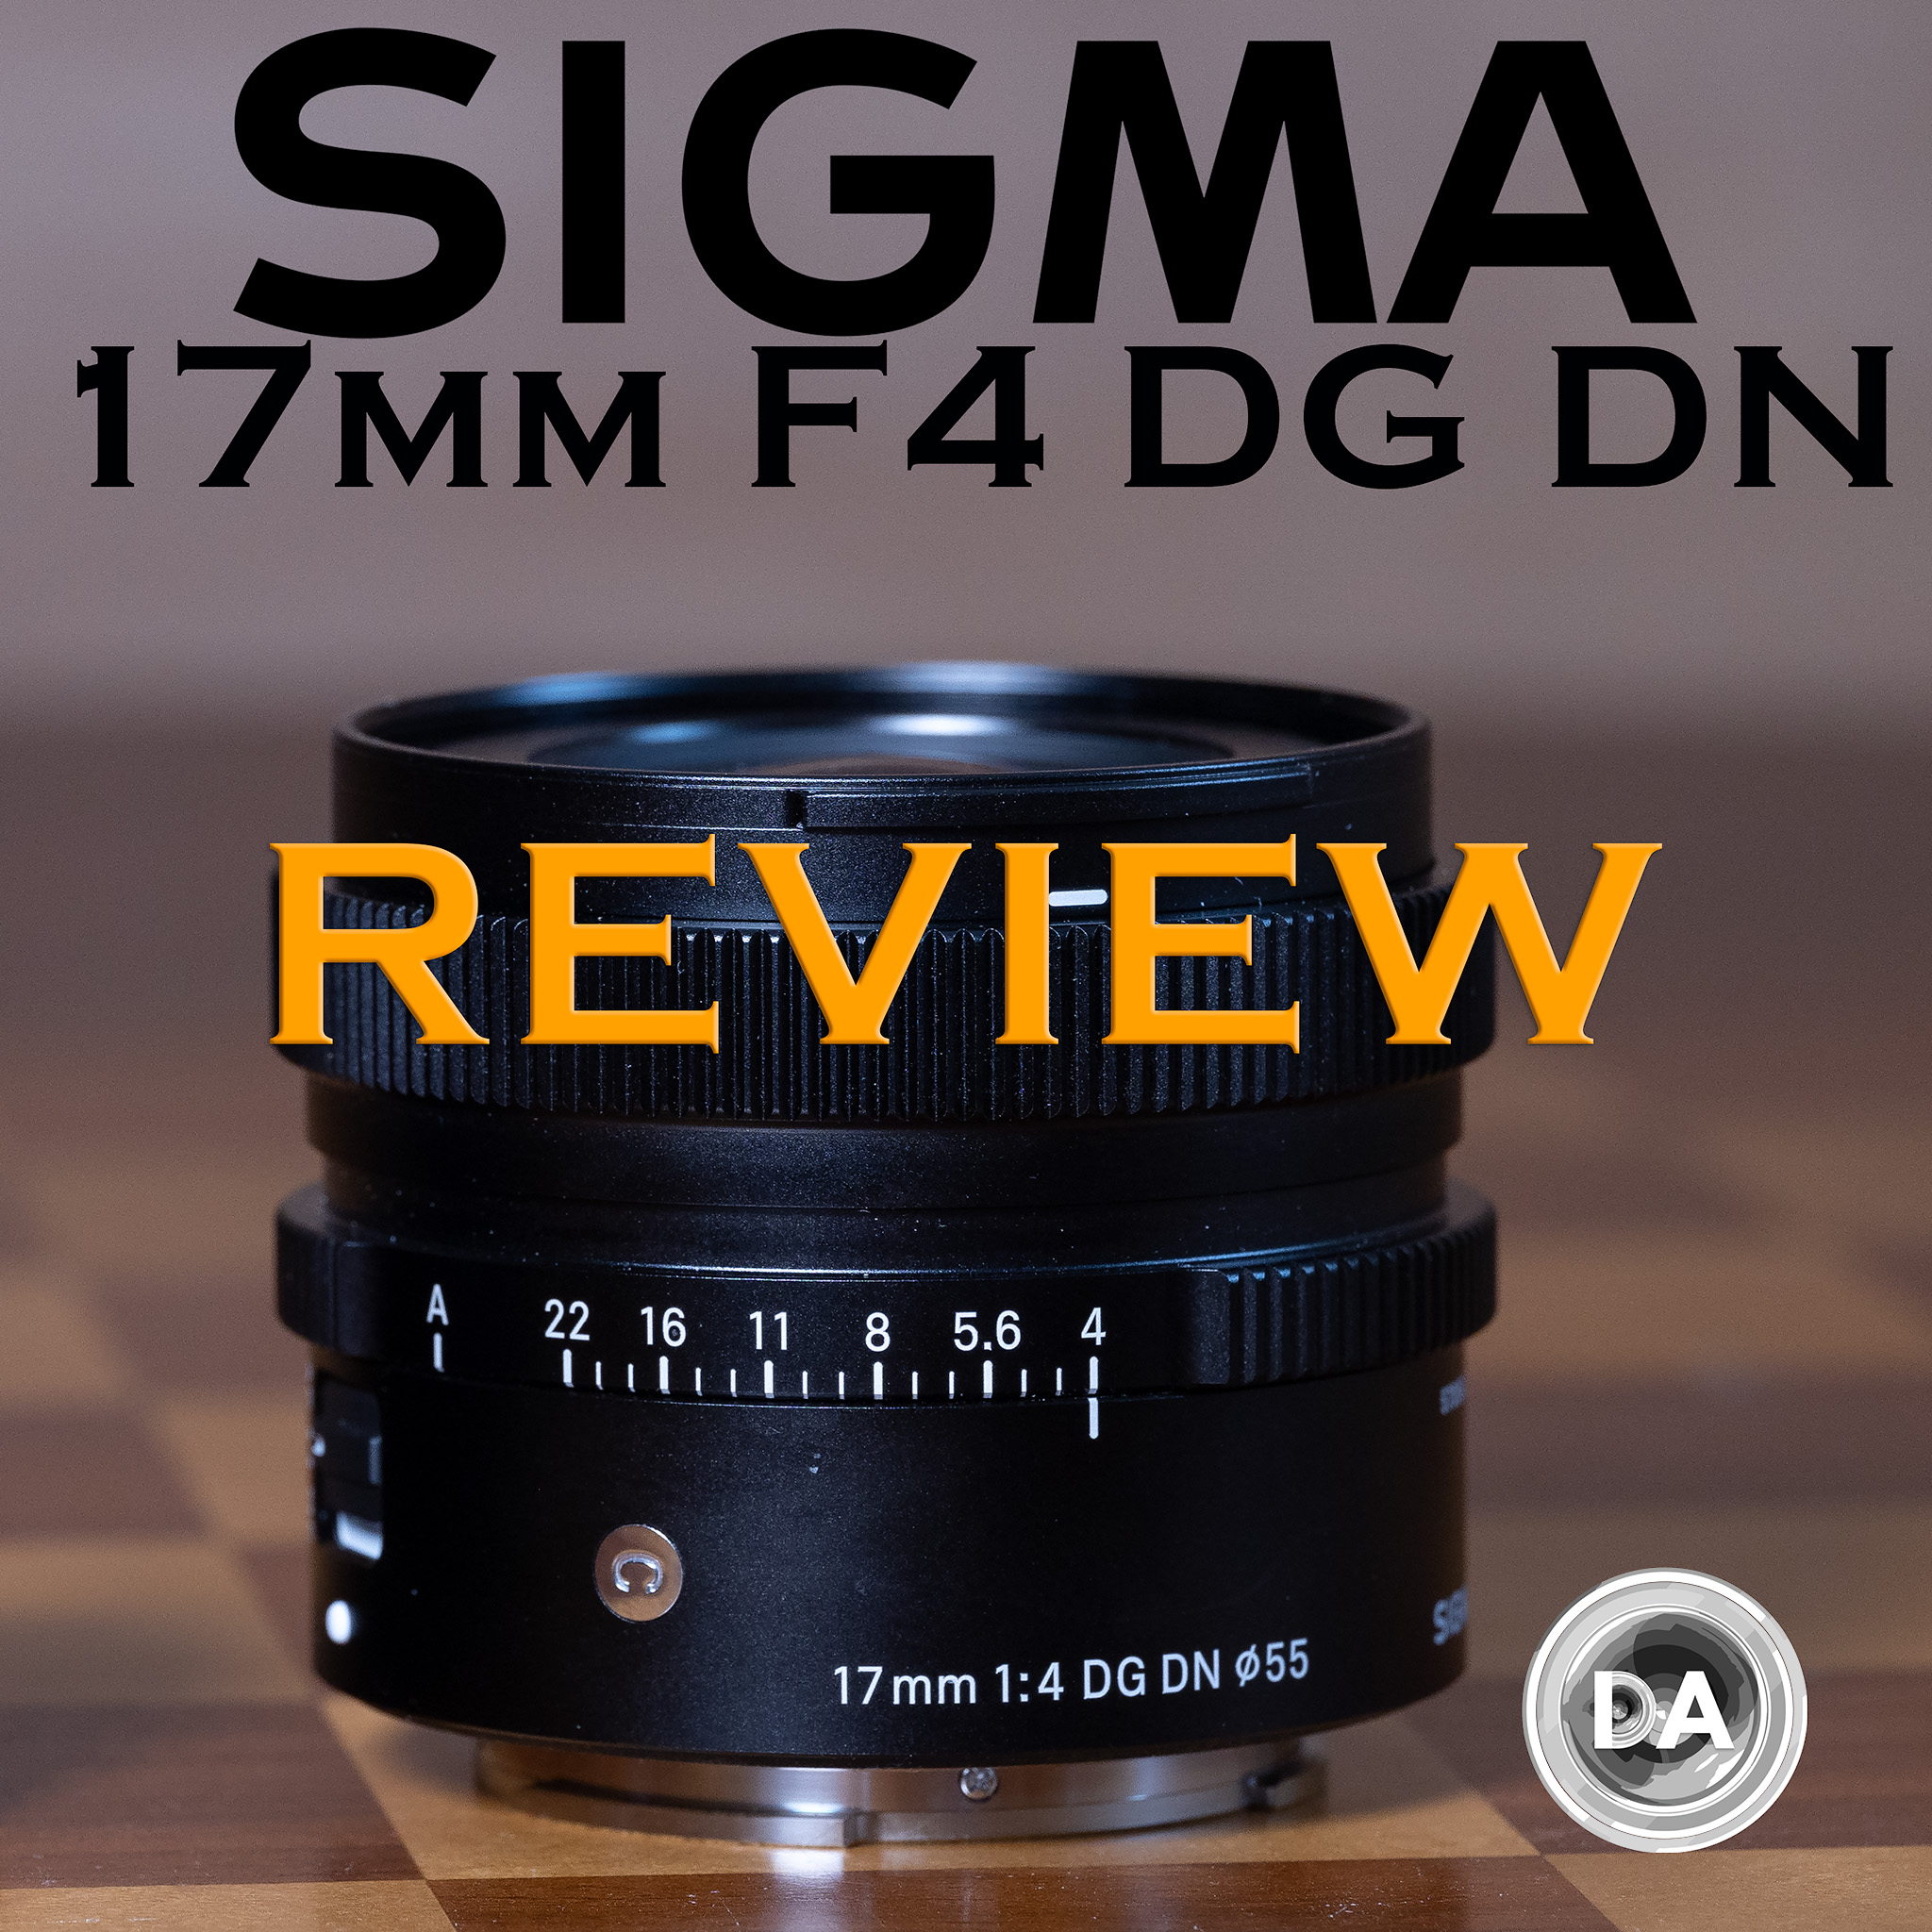 Sigma 17mm F4 DG DN (iSeries) Review - DustinAbbott.net